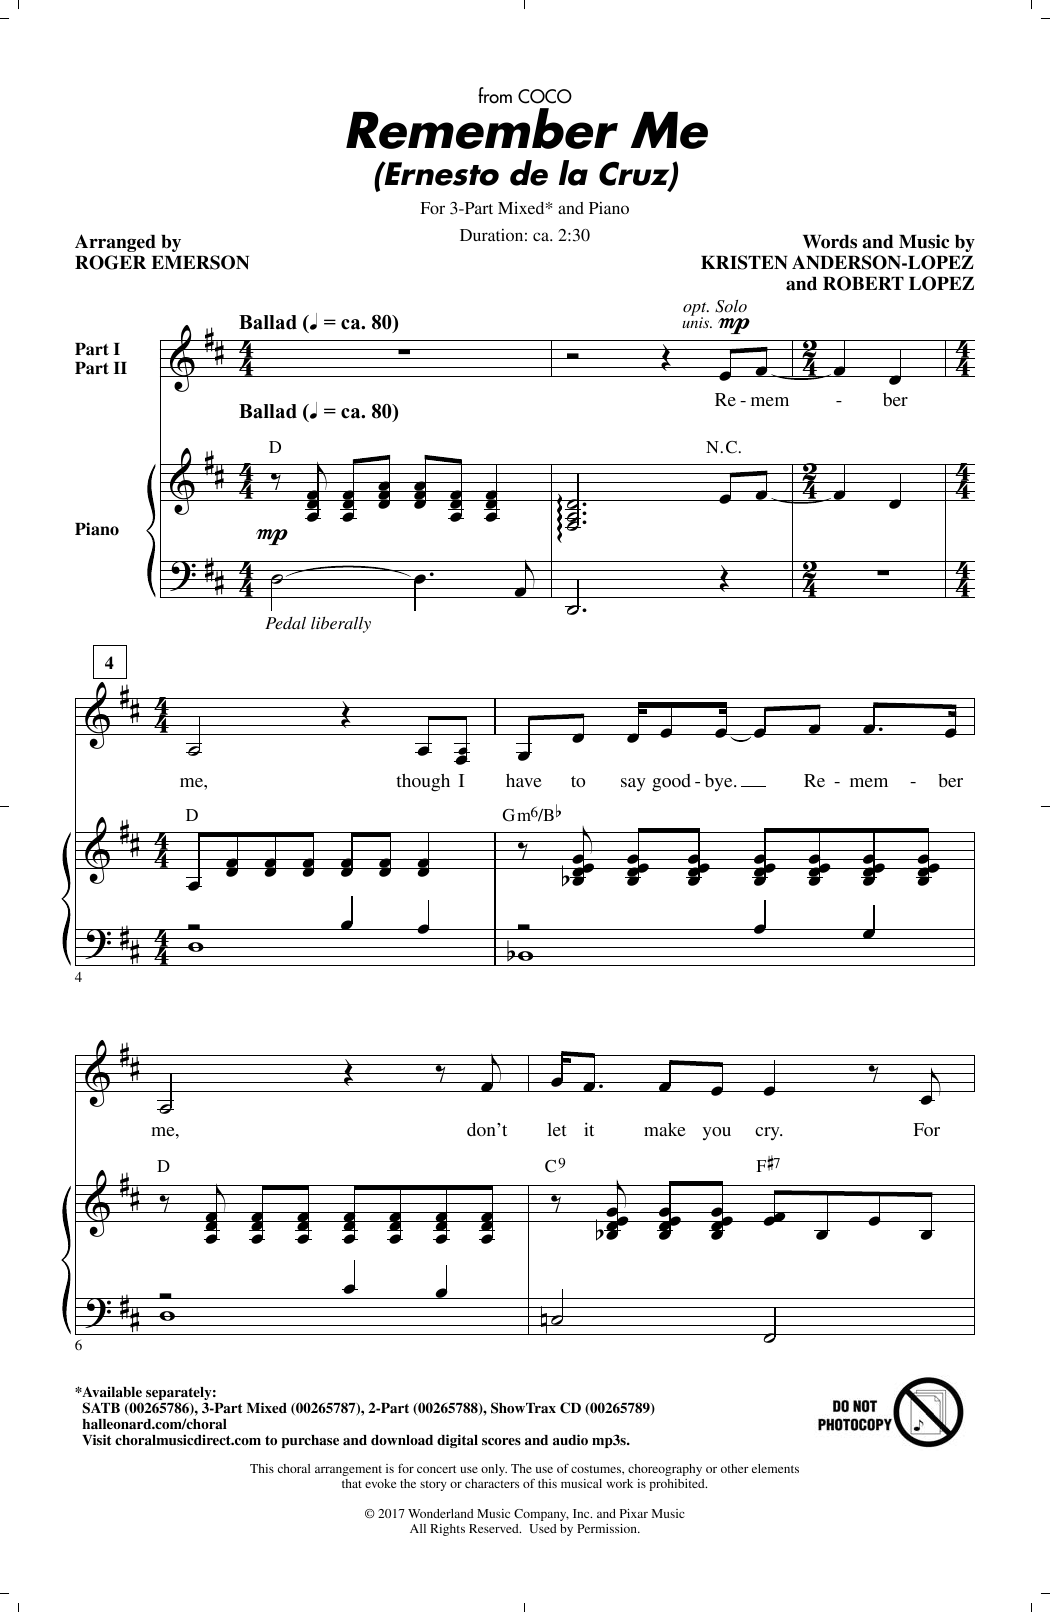 Kristen Anderson-Lopez & Robert Lopez Remember Me (Ernesto de la Cruz) (from Coco) (arr. Roger Emerson) sheet music notes and chords arranged for SATB Choir